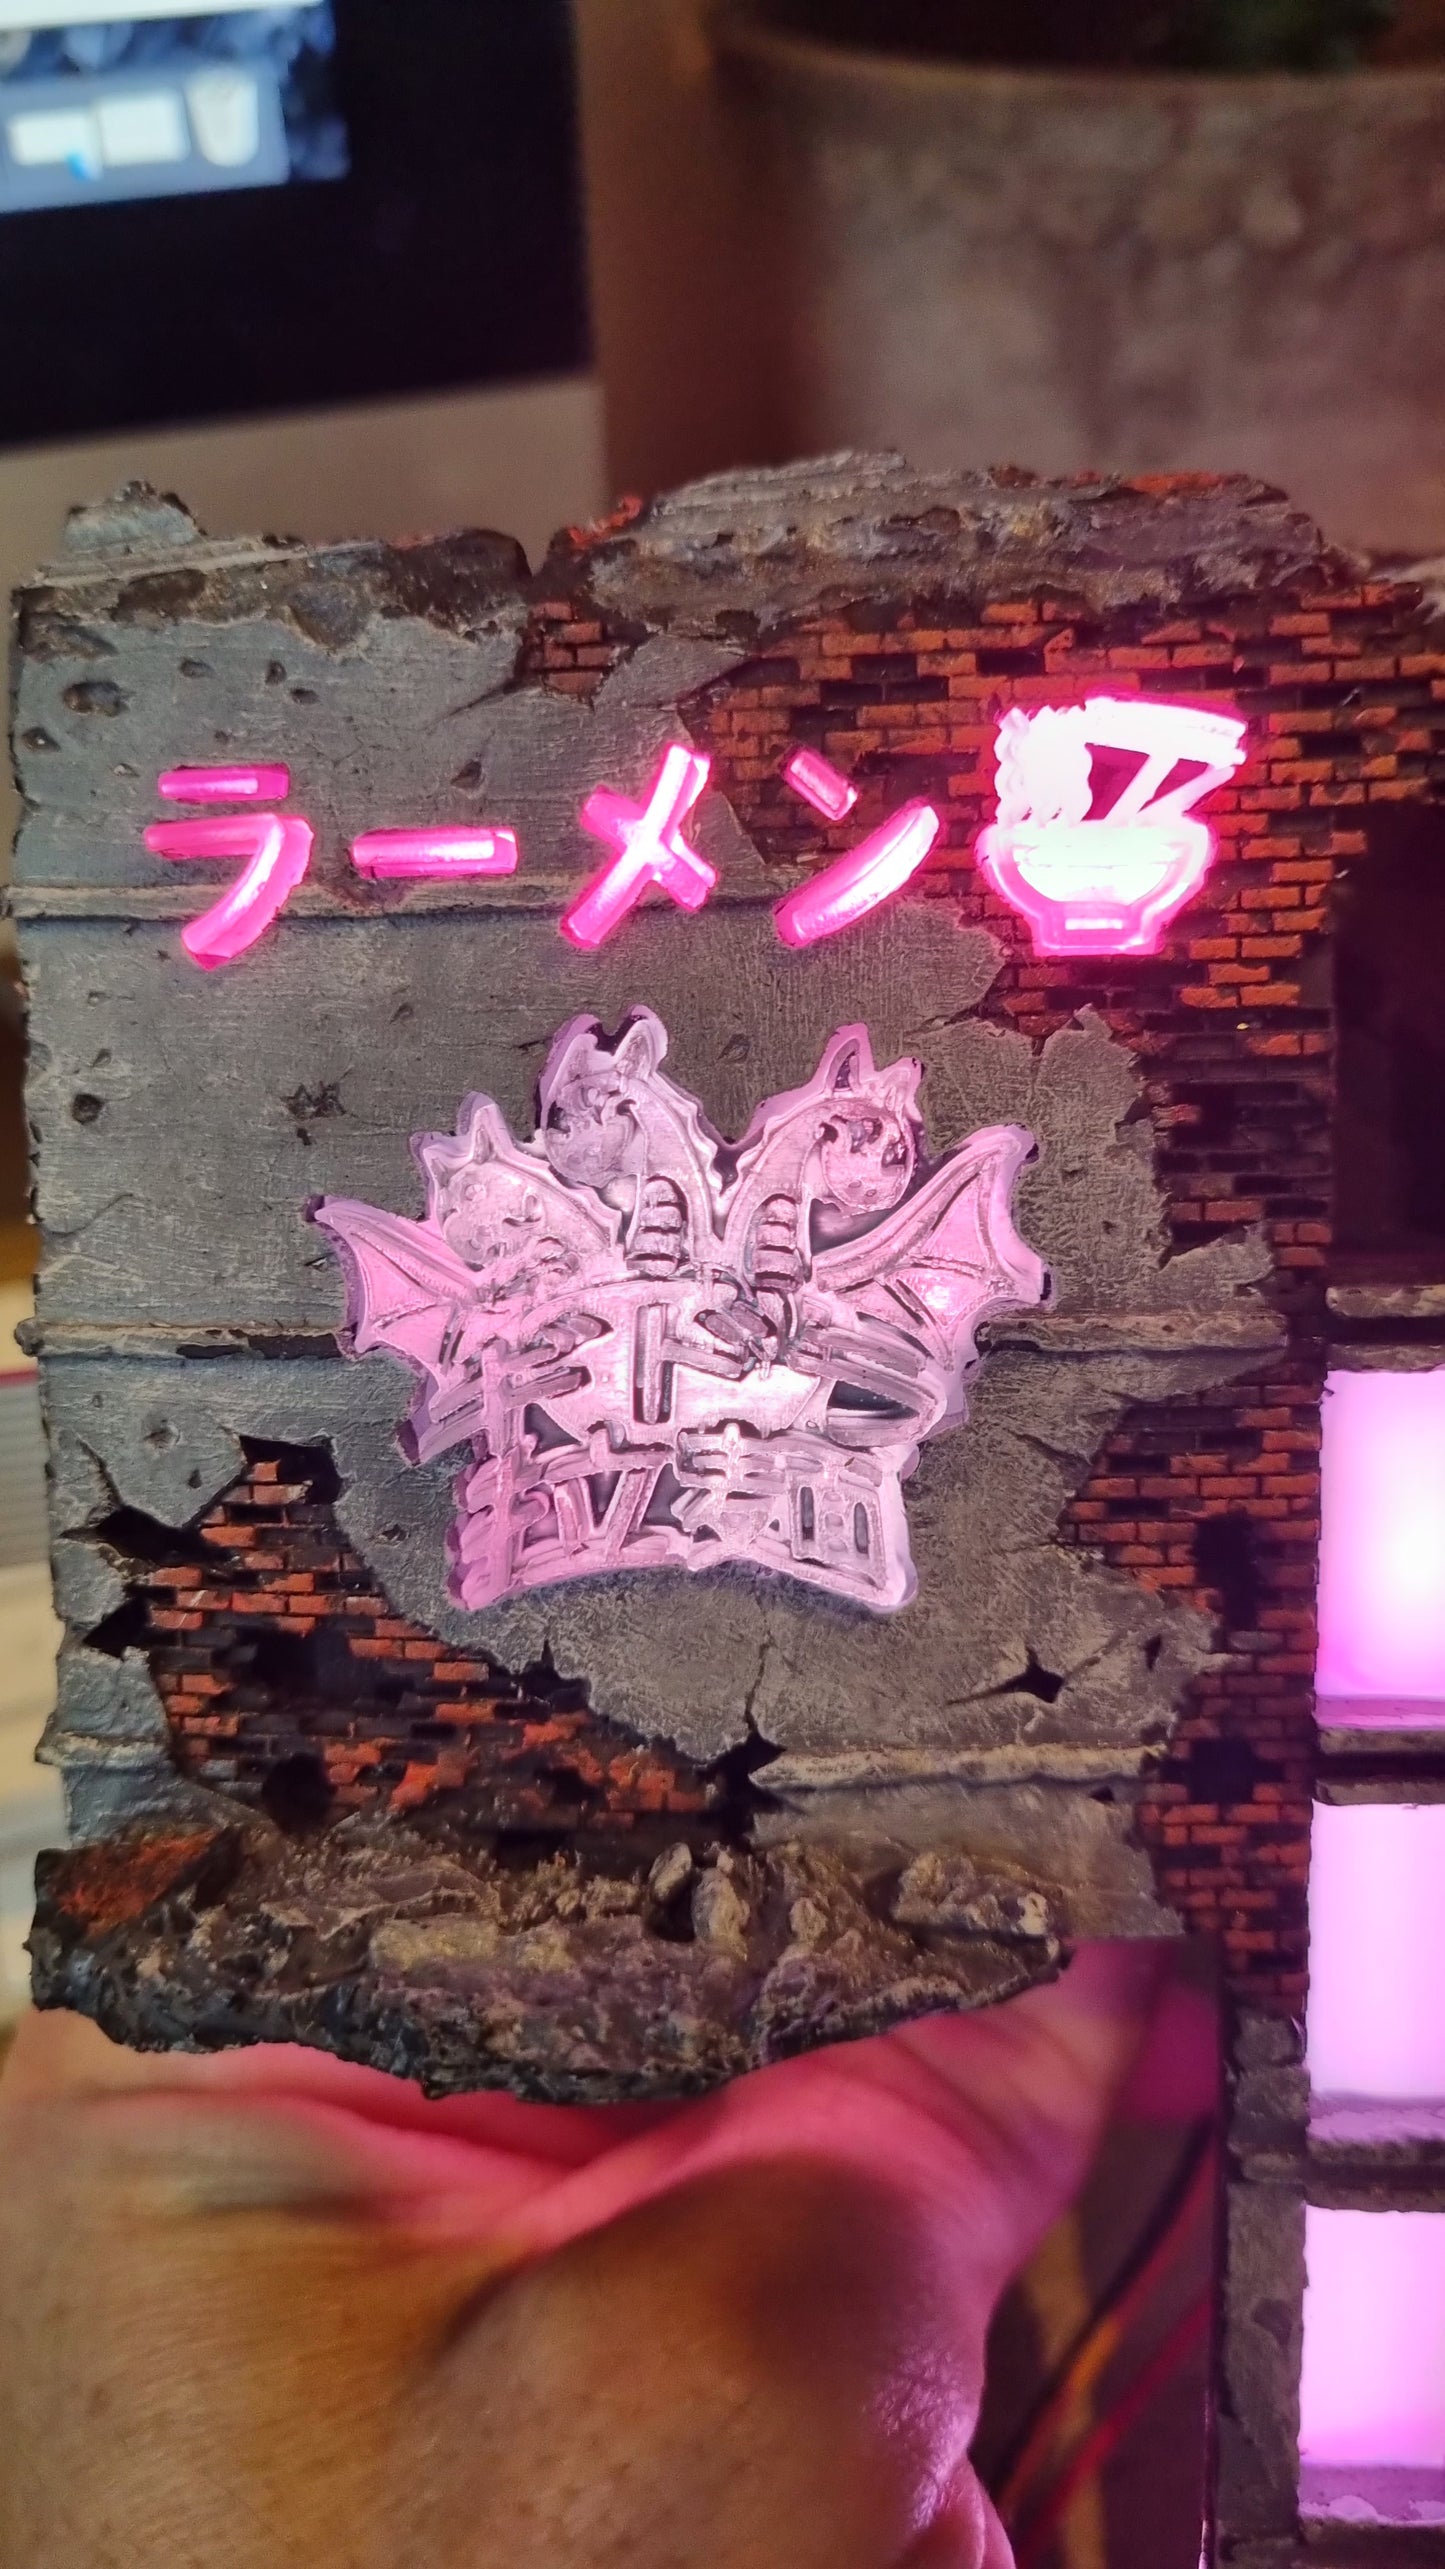 Godzilla "Noodle Bar" Building mod (Tokyo Neon #2)